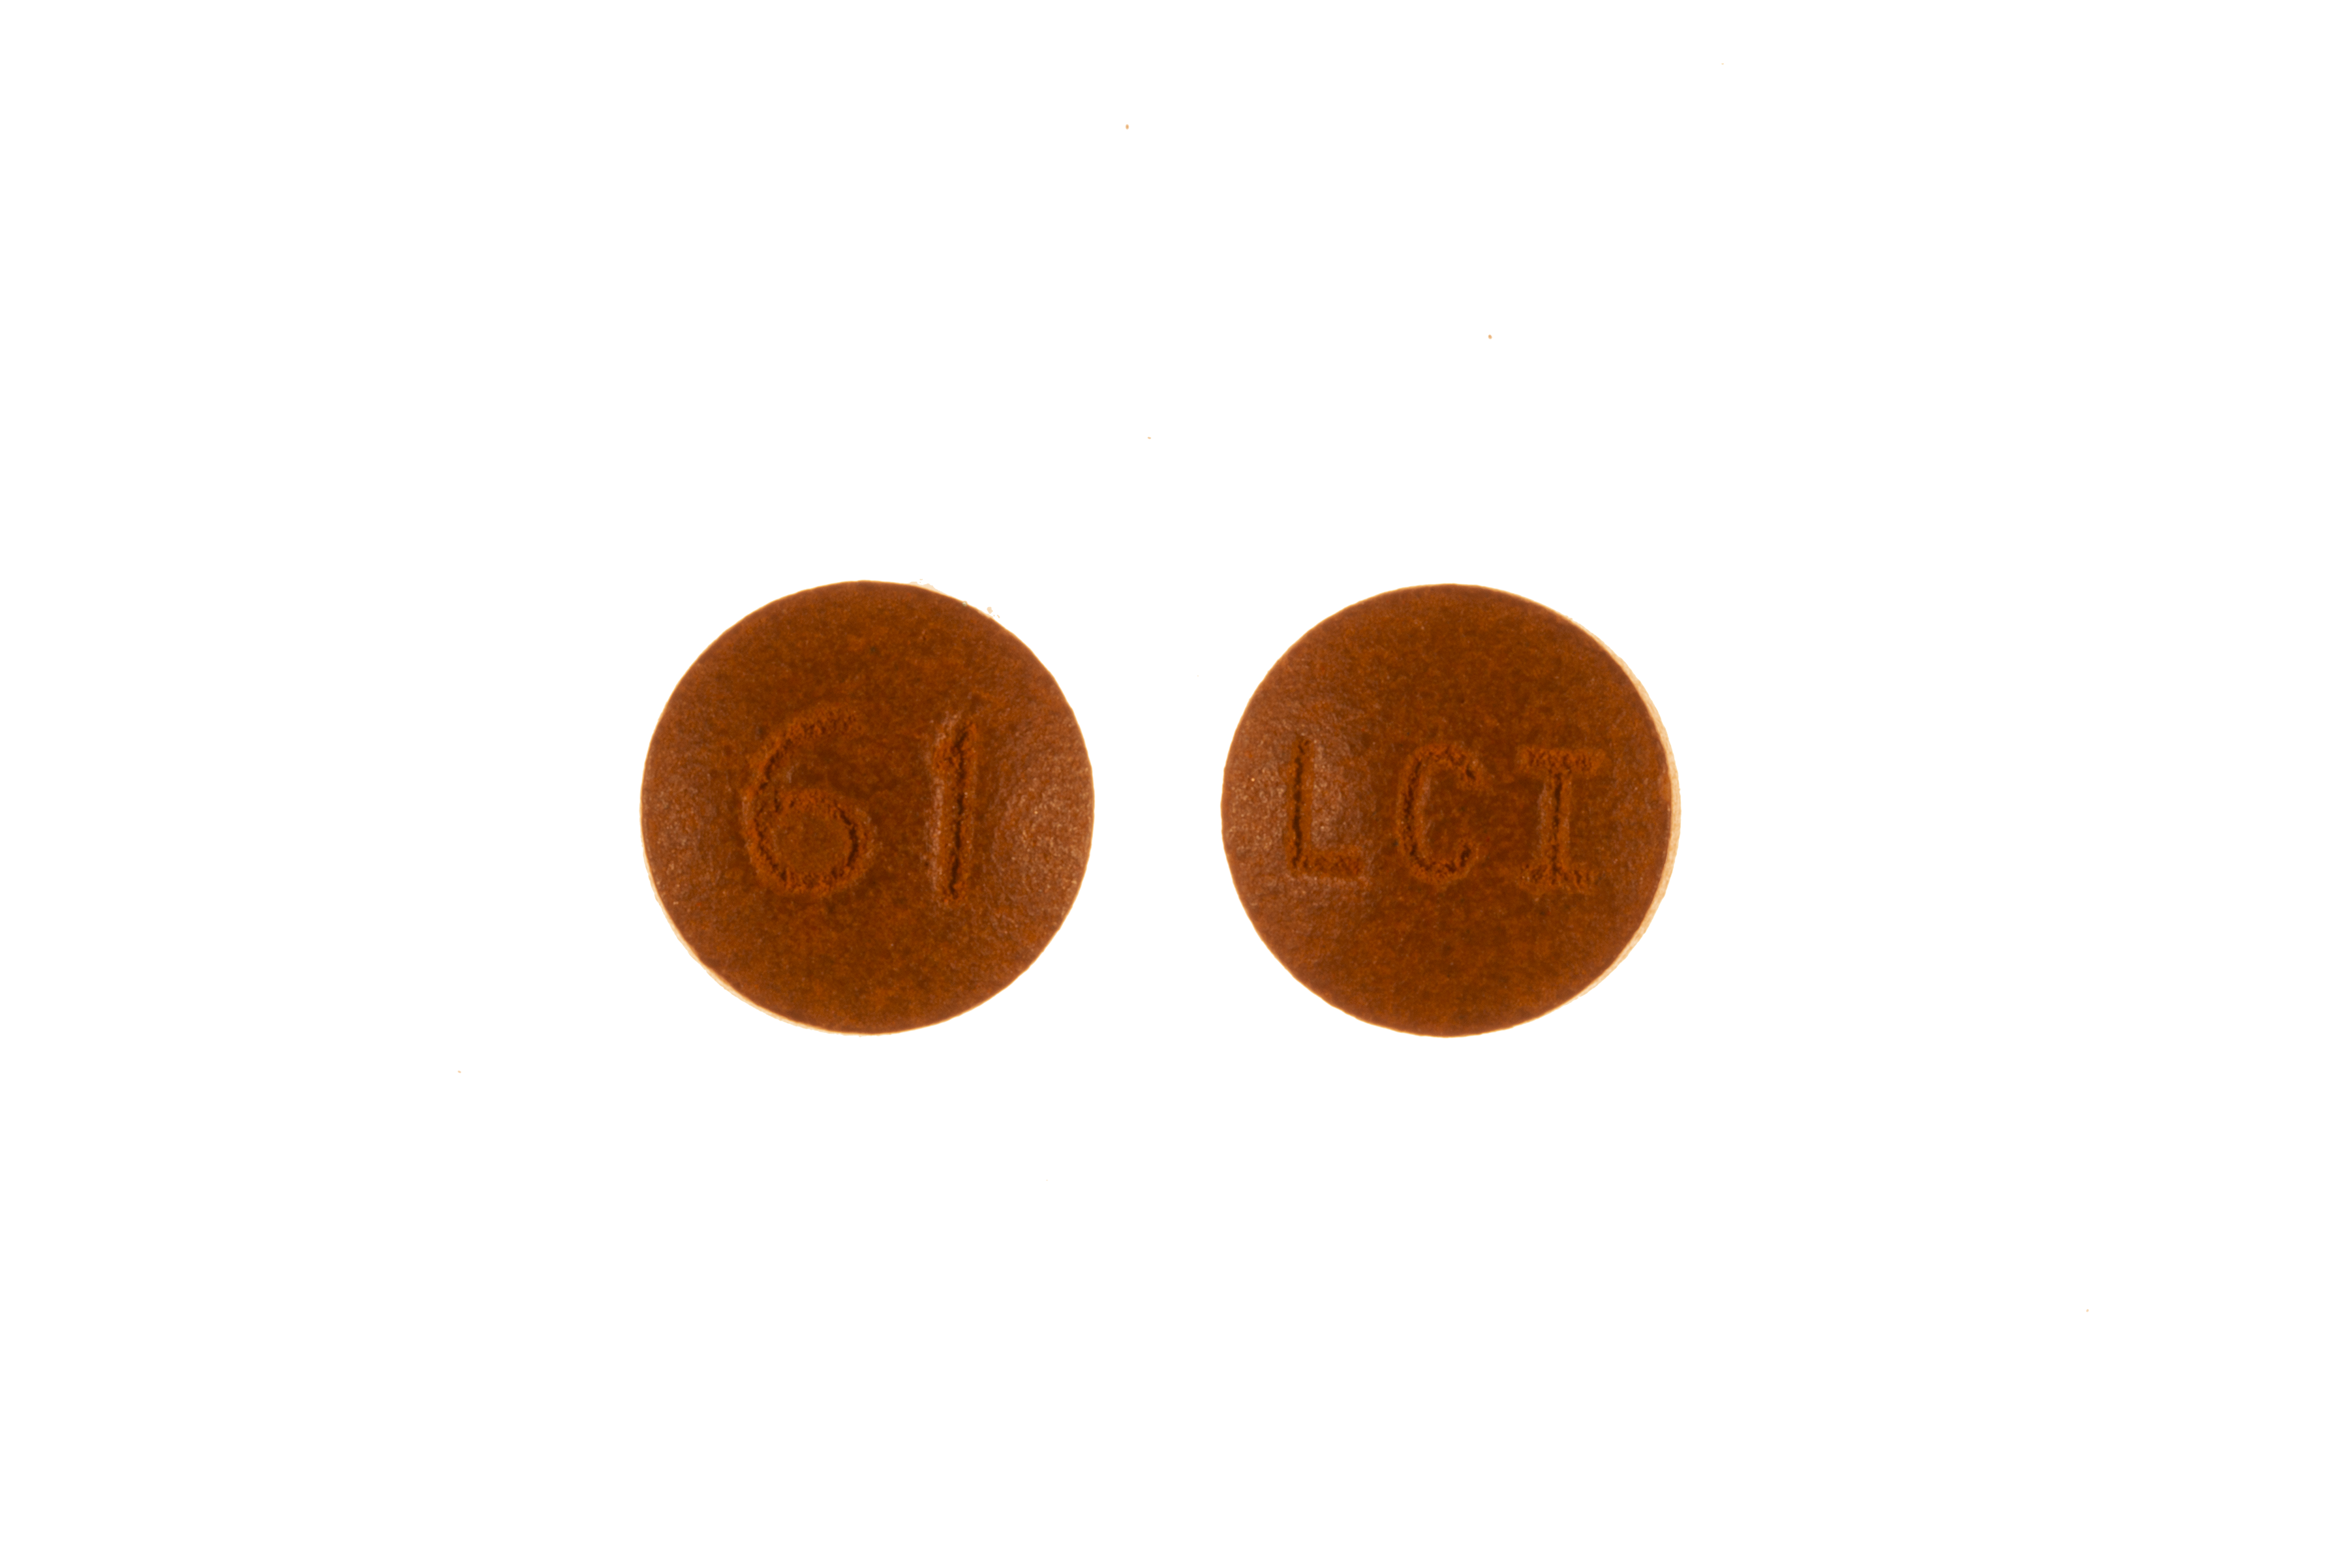 Chlorpromazine HCl Tablets